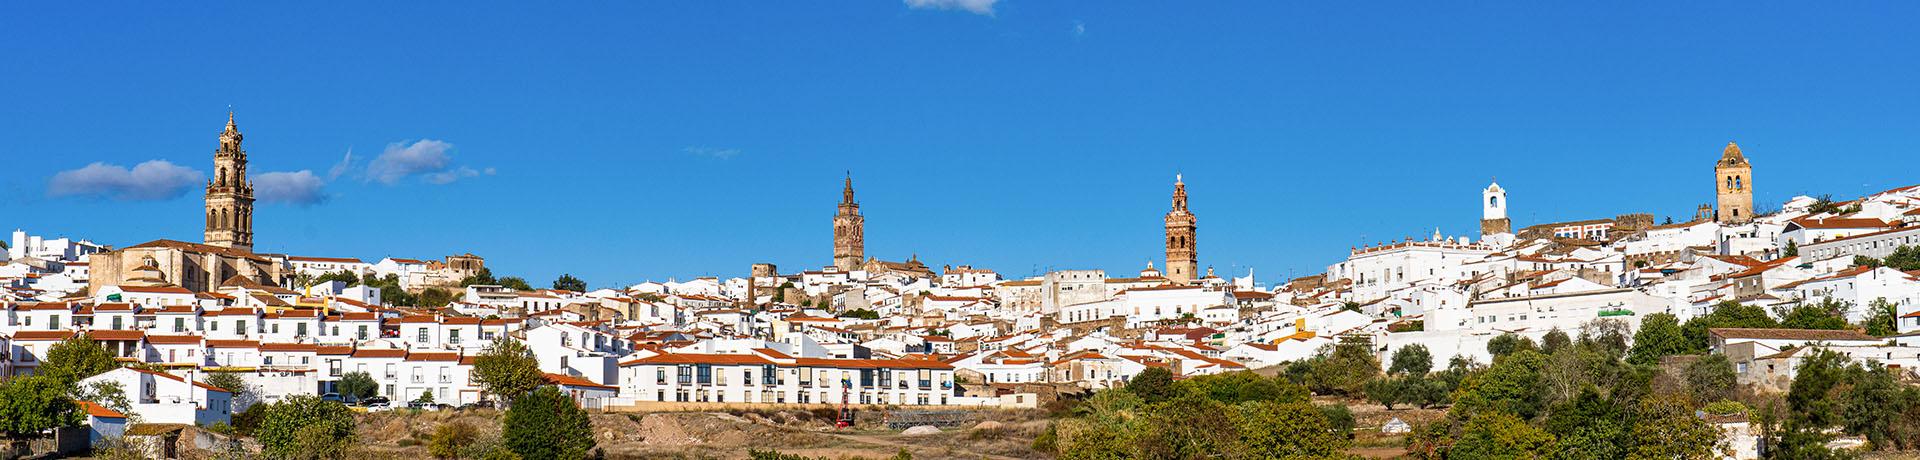 Alquiler Coche Extremadura